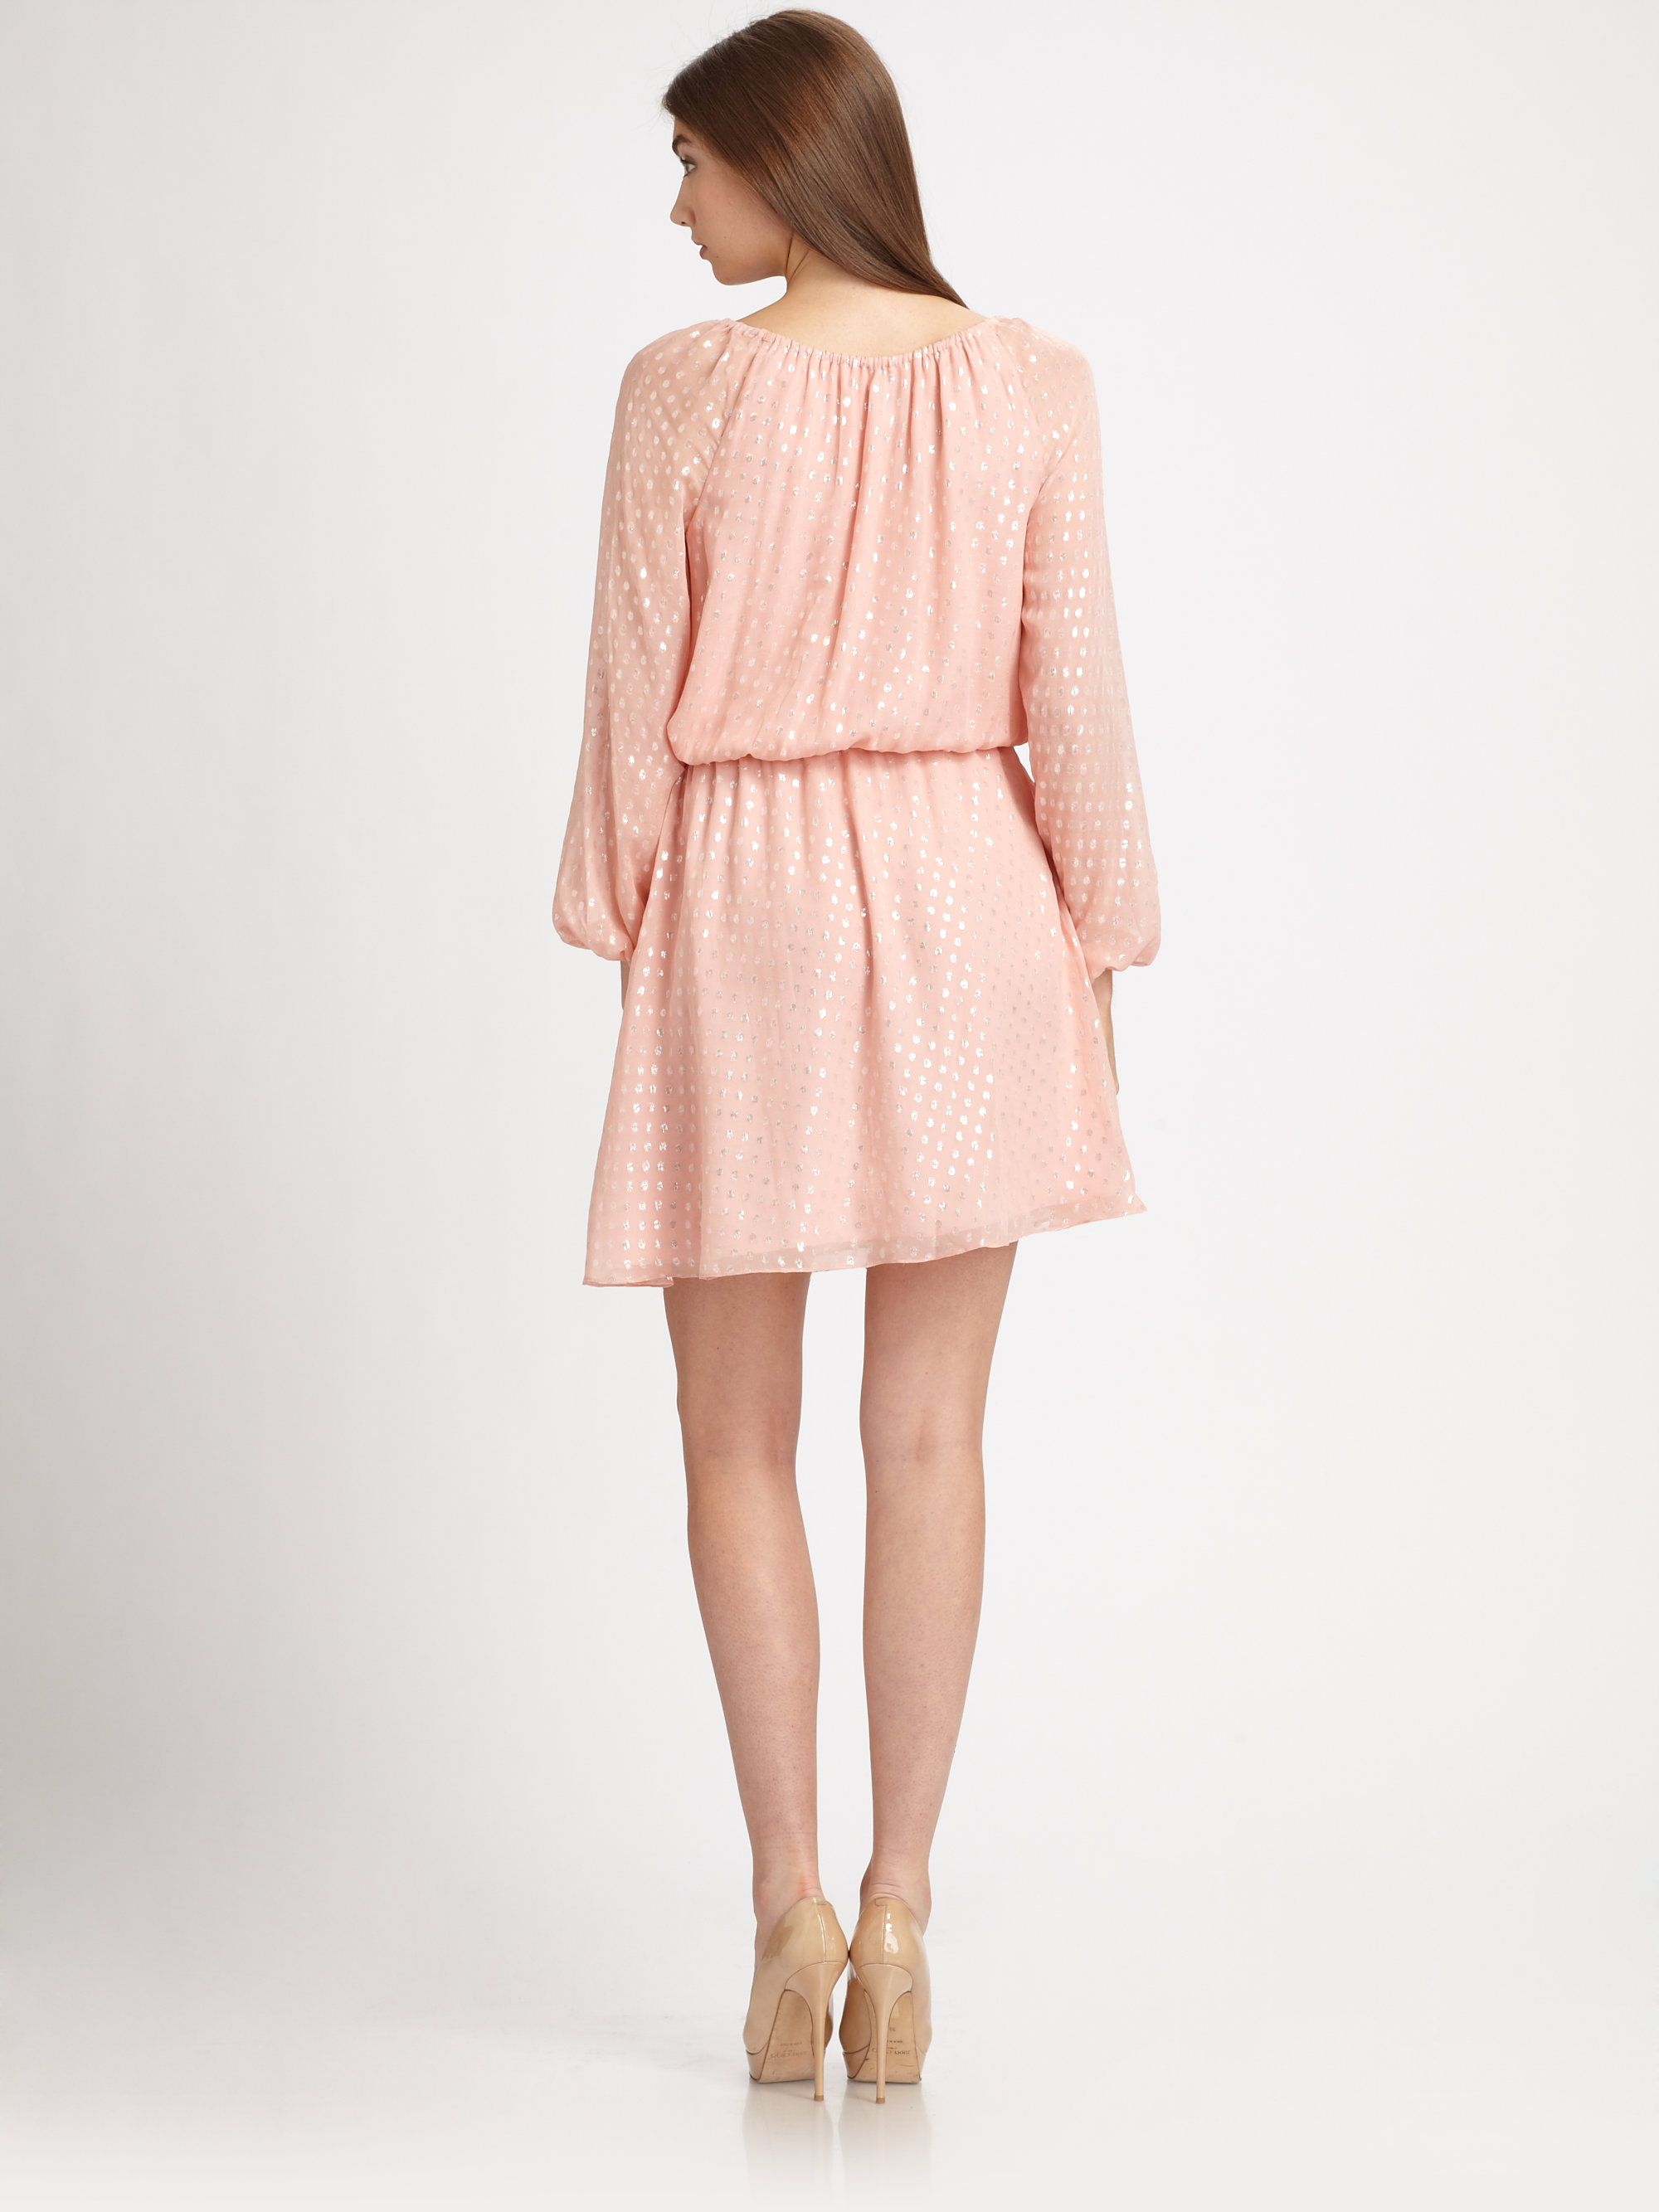 Lyst - Halston Peasant Dress in Pink